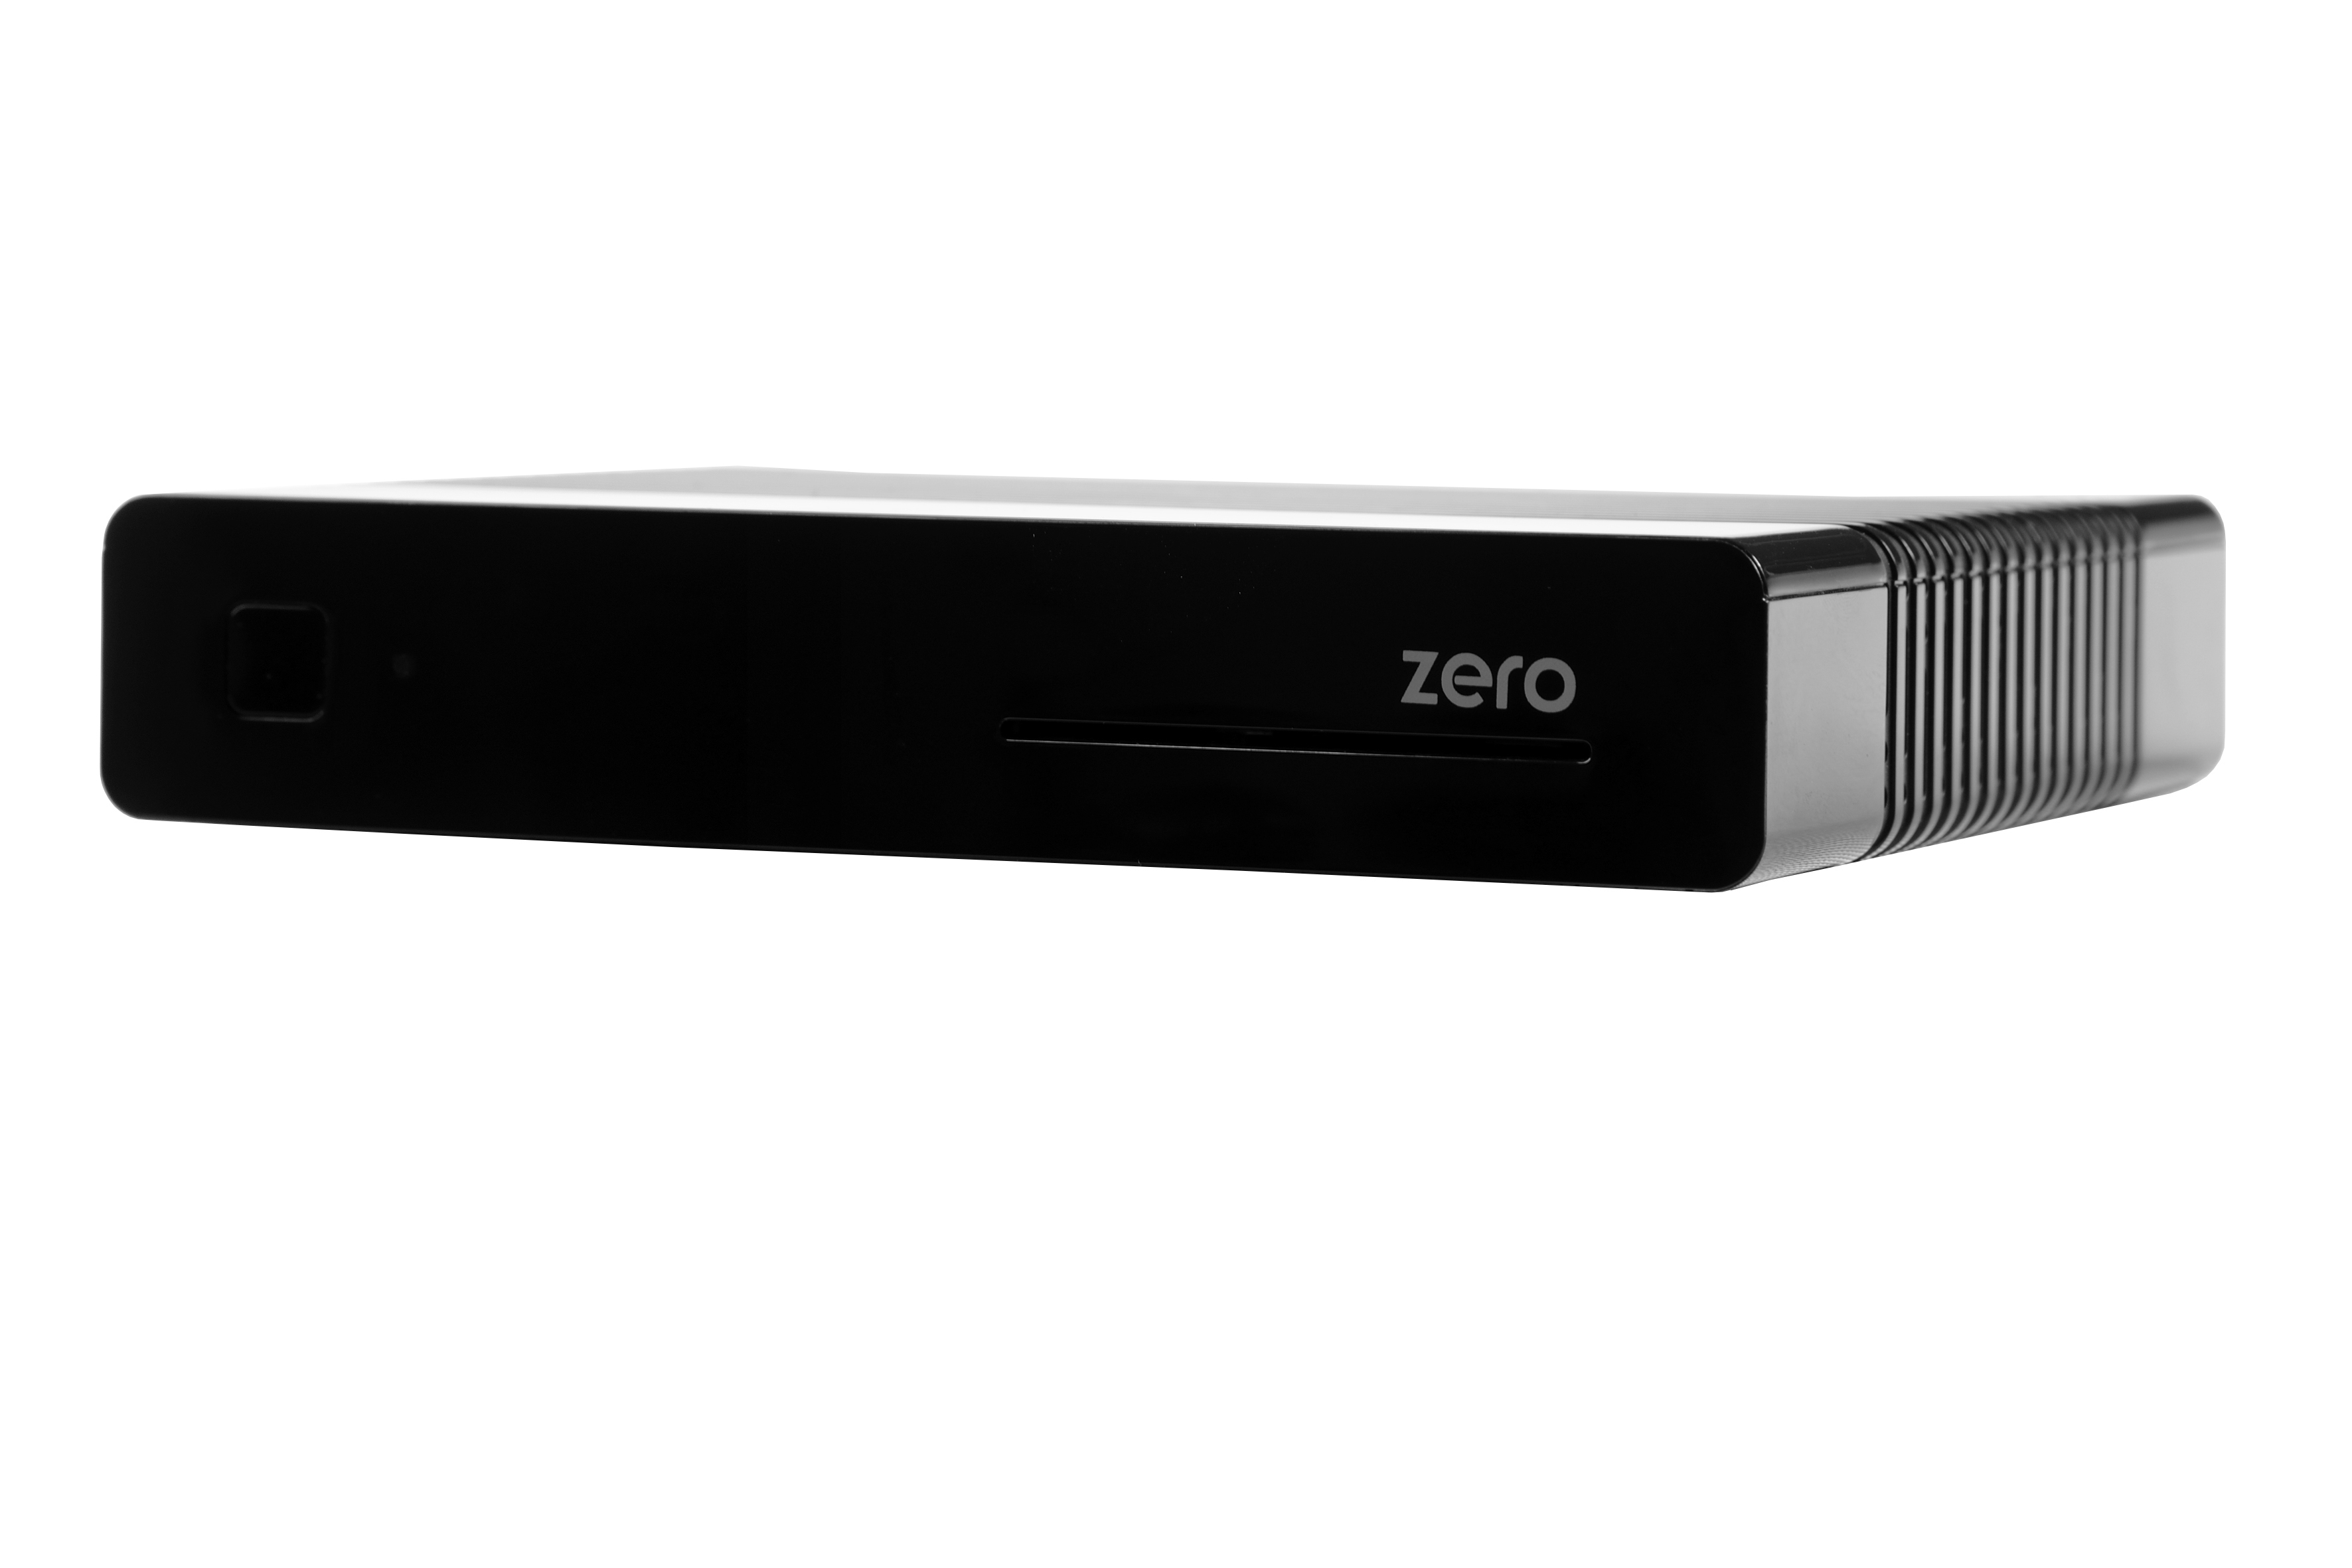 Linux DVB-S2 Receiver Schwarz) VU+ 1x Tuner (HDTV, DVB-S, ZERO DVB-S2,